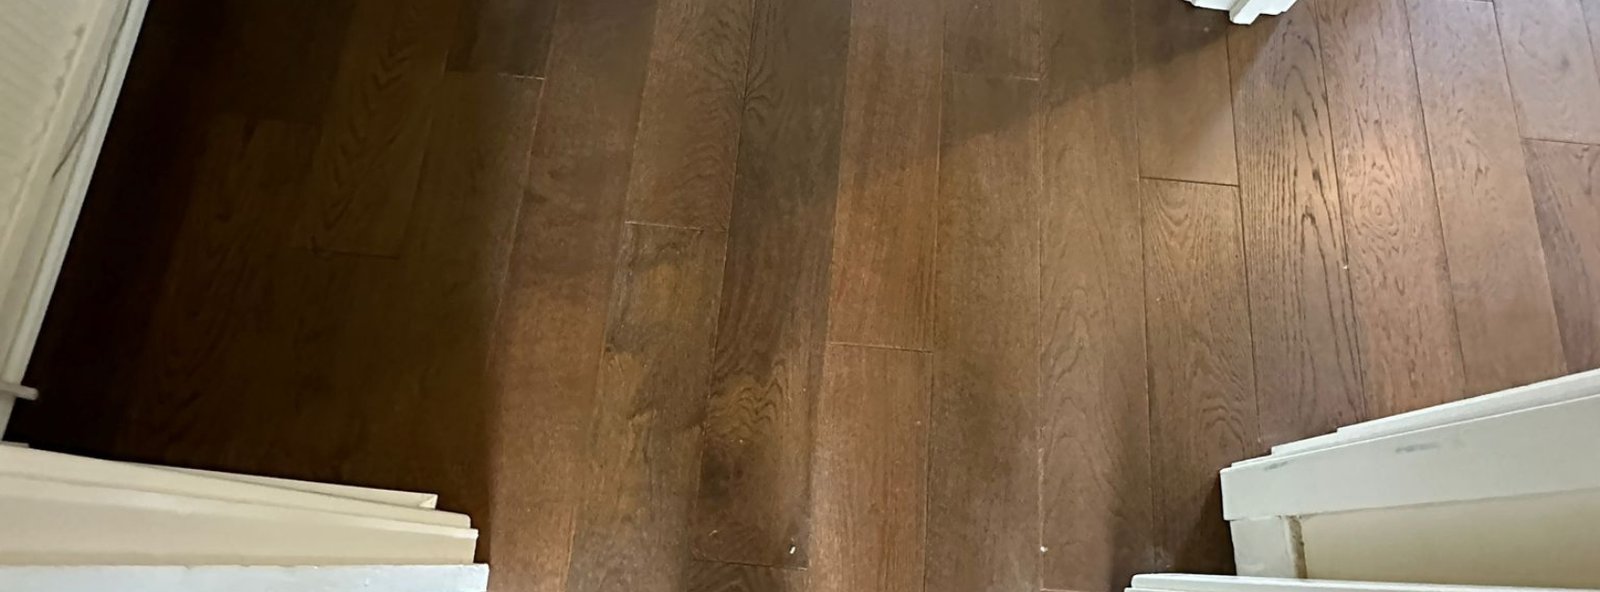 point of flooring,wood flooring london,wood flooring fitting london,wood floor fitting london,chevron flooring london, wood floor fitting london, lvt herringbone flooring, engineered flooring, engineered wood flooring, chevron wood flooring, wood flooring expert,wood flooring design, wood flooring installation, wood flooring restoration, wood floor fitters london, lvt floor fitting london, lvt flooring fitting london, chevron floor fitter london,herringbone floor fitters london, wood floor bathroom, wood effect vinyl flooring, blackwood flooring, flooring lightwood